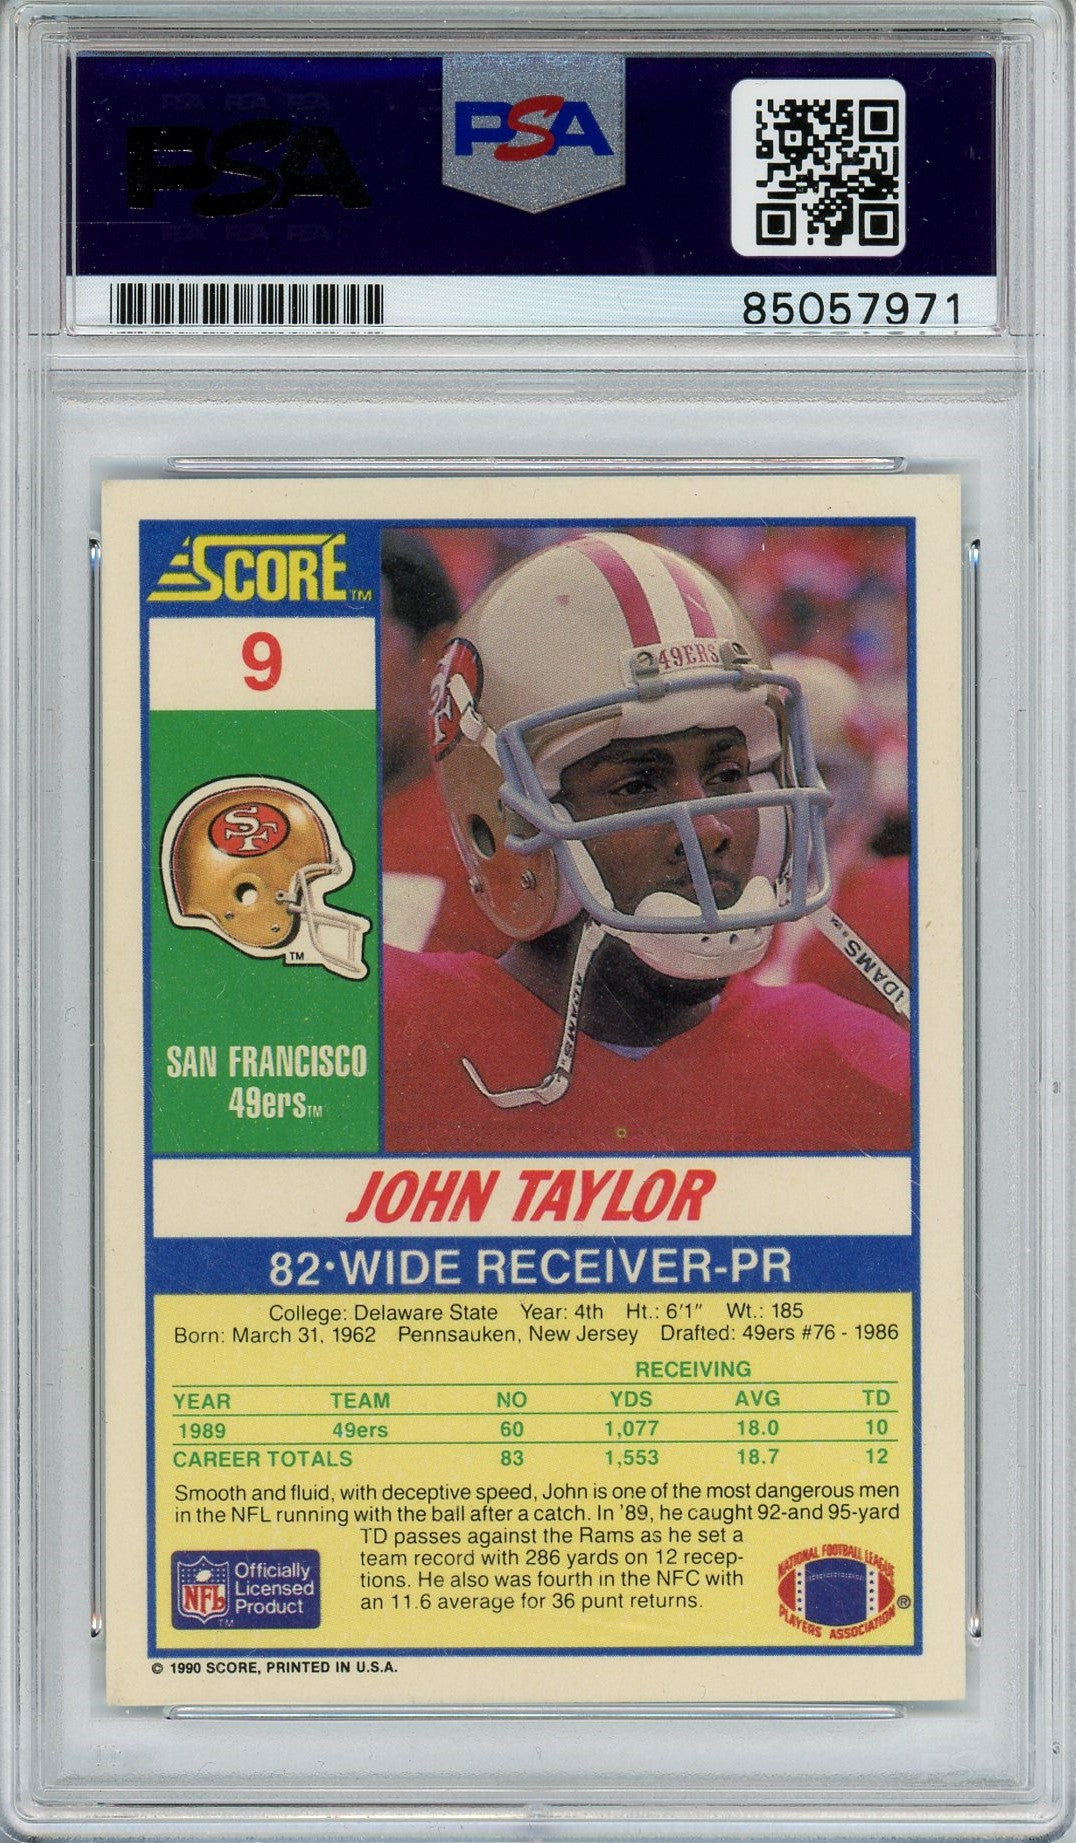 1989 PRO SET JOHN TAYLOR RC ROOKIE AUTO CARD PSA DNA (7972)